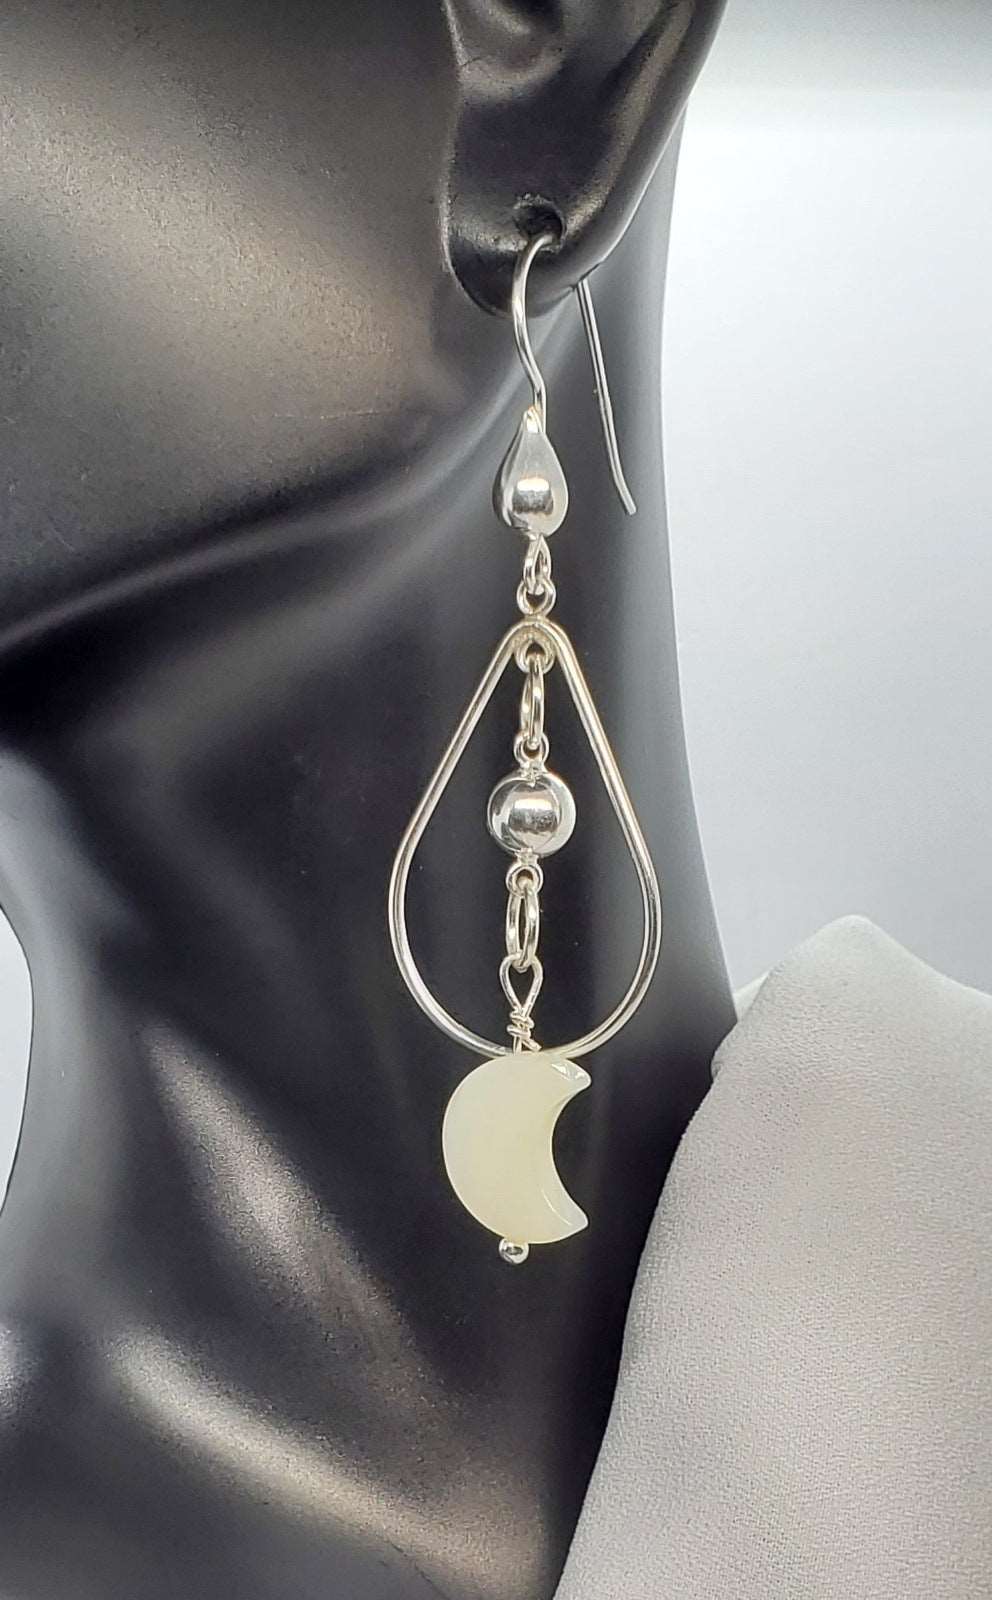 Half moon earrings, pearl moon earrings, handmade earrings, dangling moon earrings, earrings for women, Mae Drop Earrings